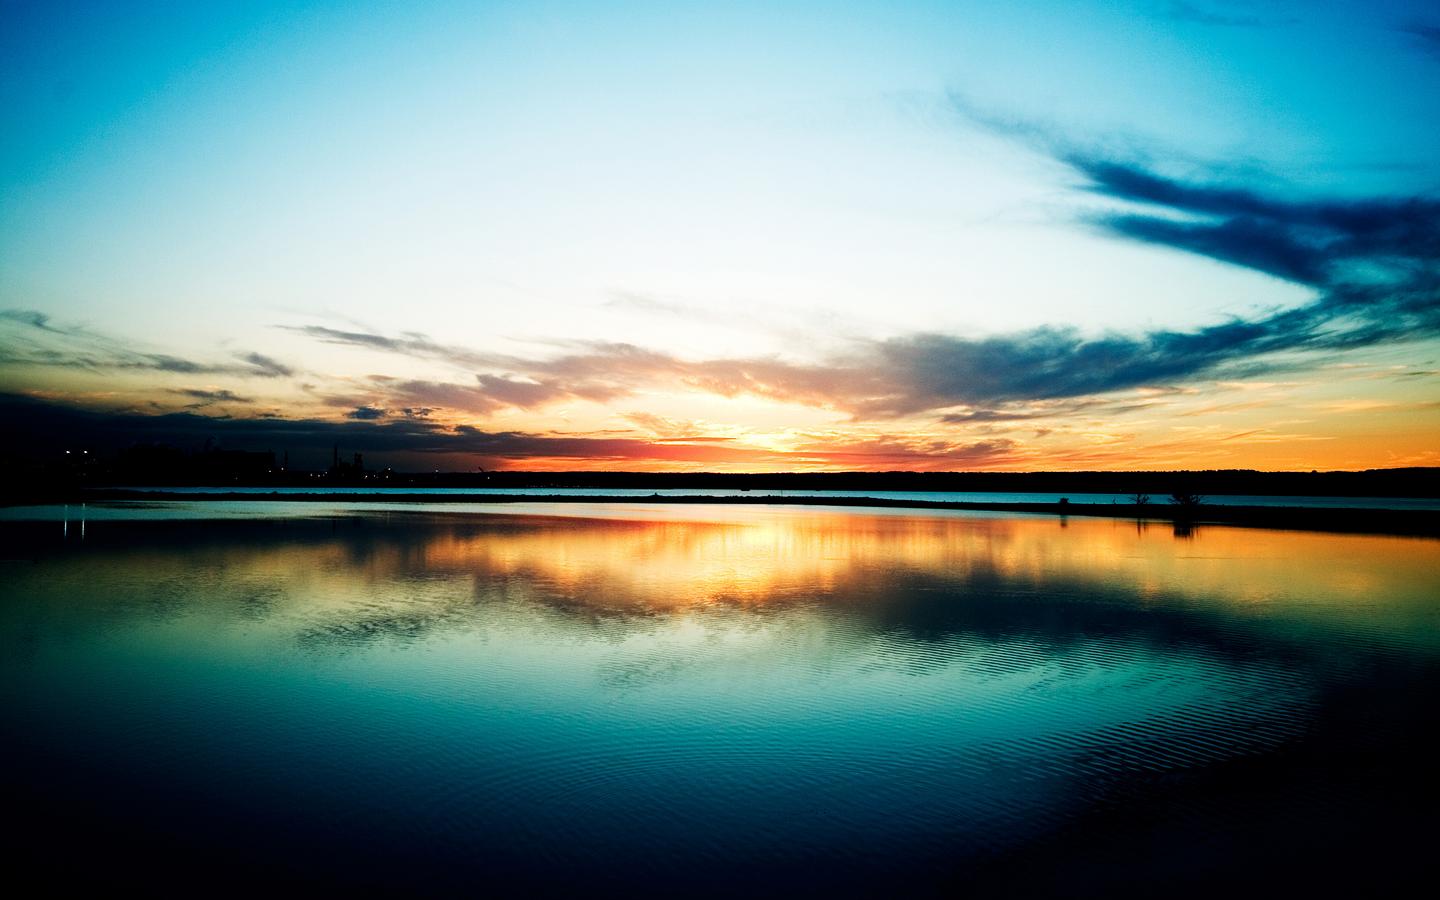 https://blogger.googleusercontent.com/img/b/R29vZ2xl/AVvXsEjgKNX9MTu71CKCPN39XAnCZTWua_pqFs7BO4s5W9LiFeirjkWNetIBOtCG4mJdOGGLGgQtReS21o5lKCGQ4inCdxmj1zvoC2FgUGPqgbBM4MtgiLb1uKOH6zqKab8aV6LN0YHjYKmKxc8/s1600/painted-sunset-reflection-on-lake-sky-wallpaper.jpg